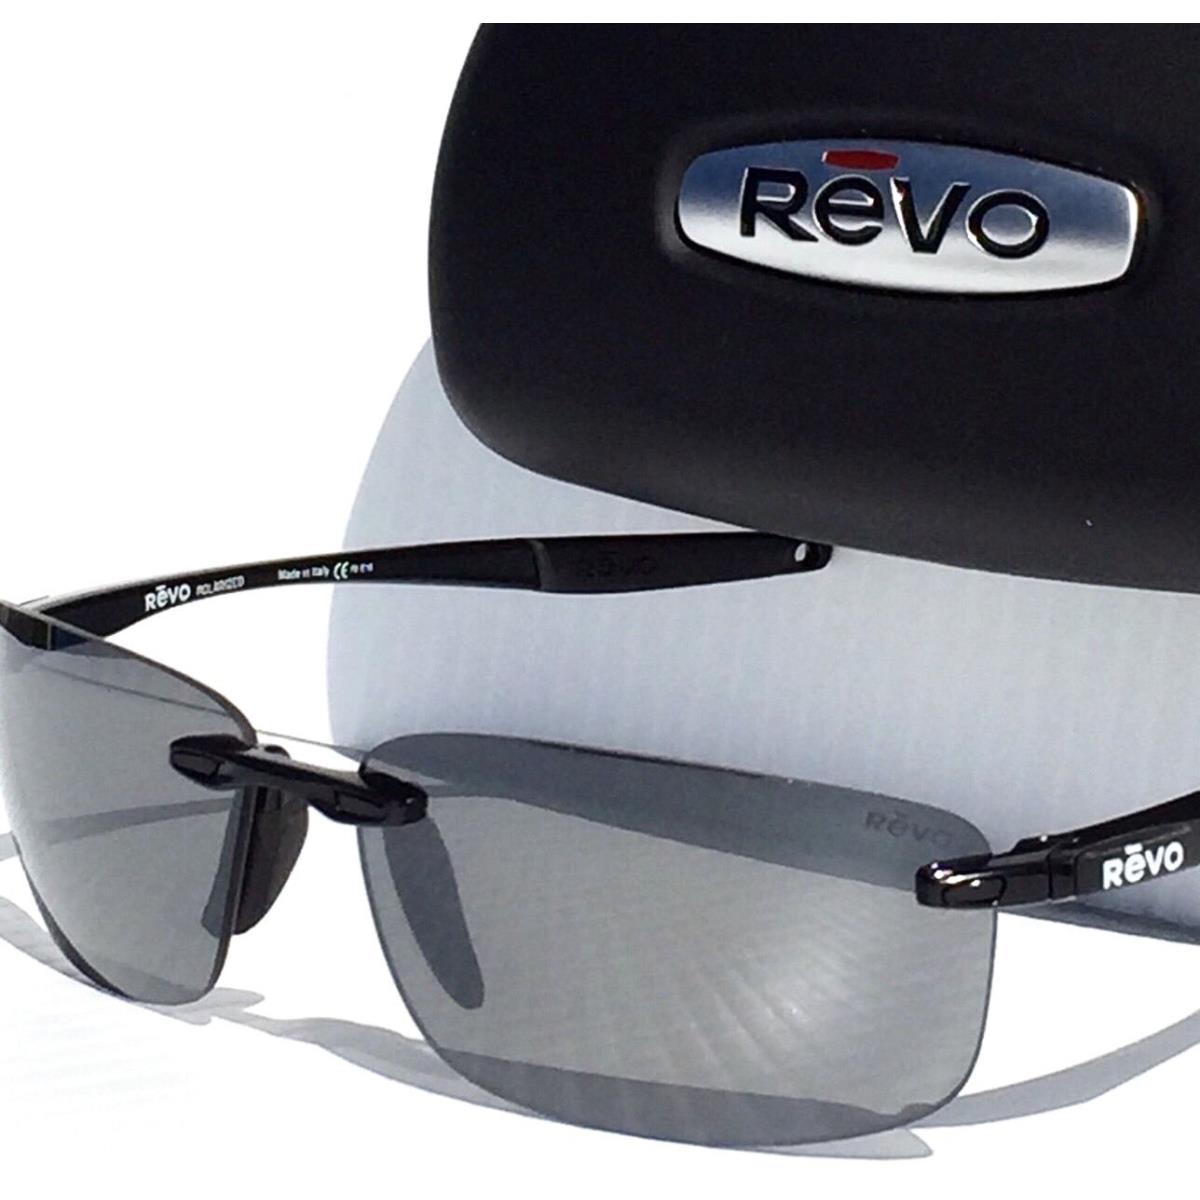 Revo sunglasses Descend - Black Frame, Gray Lens